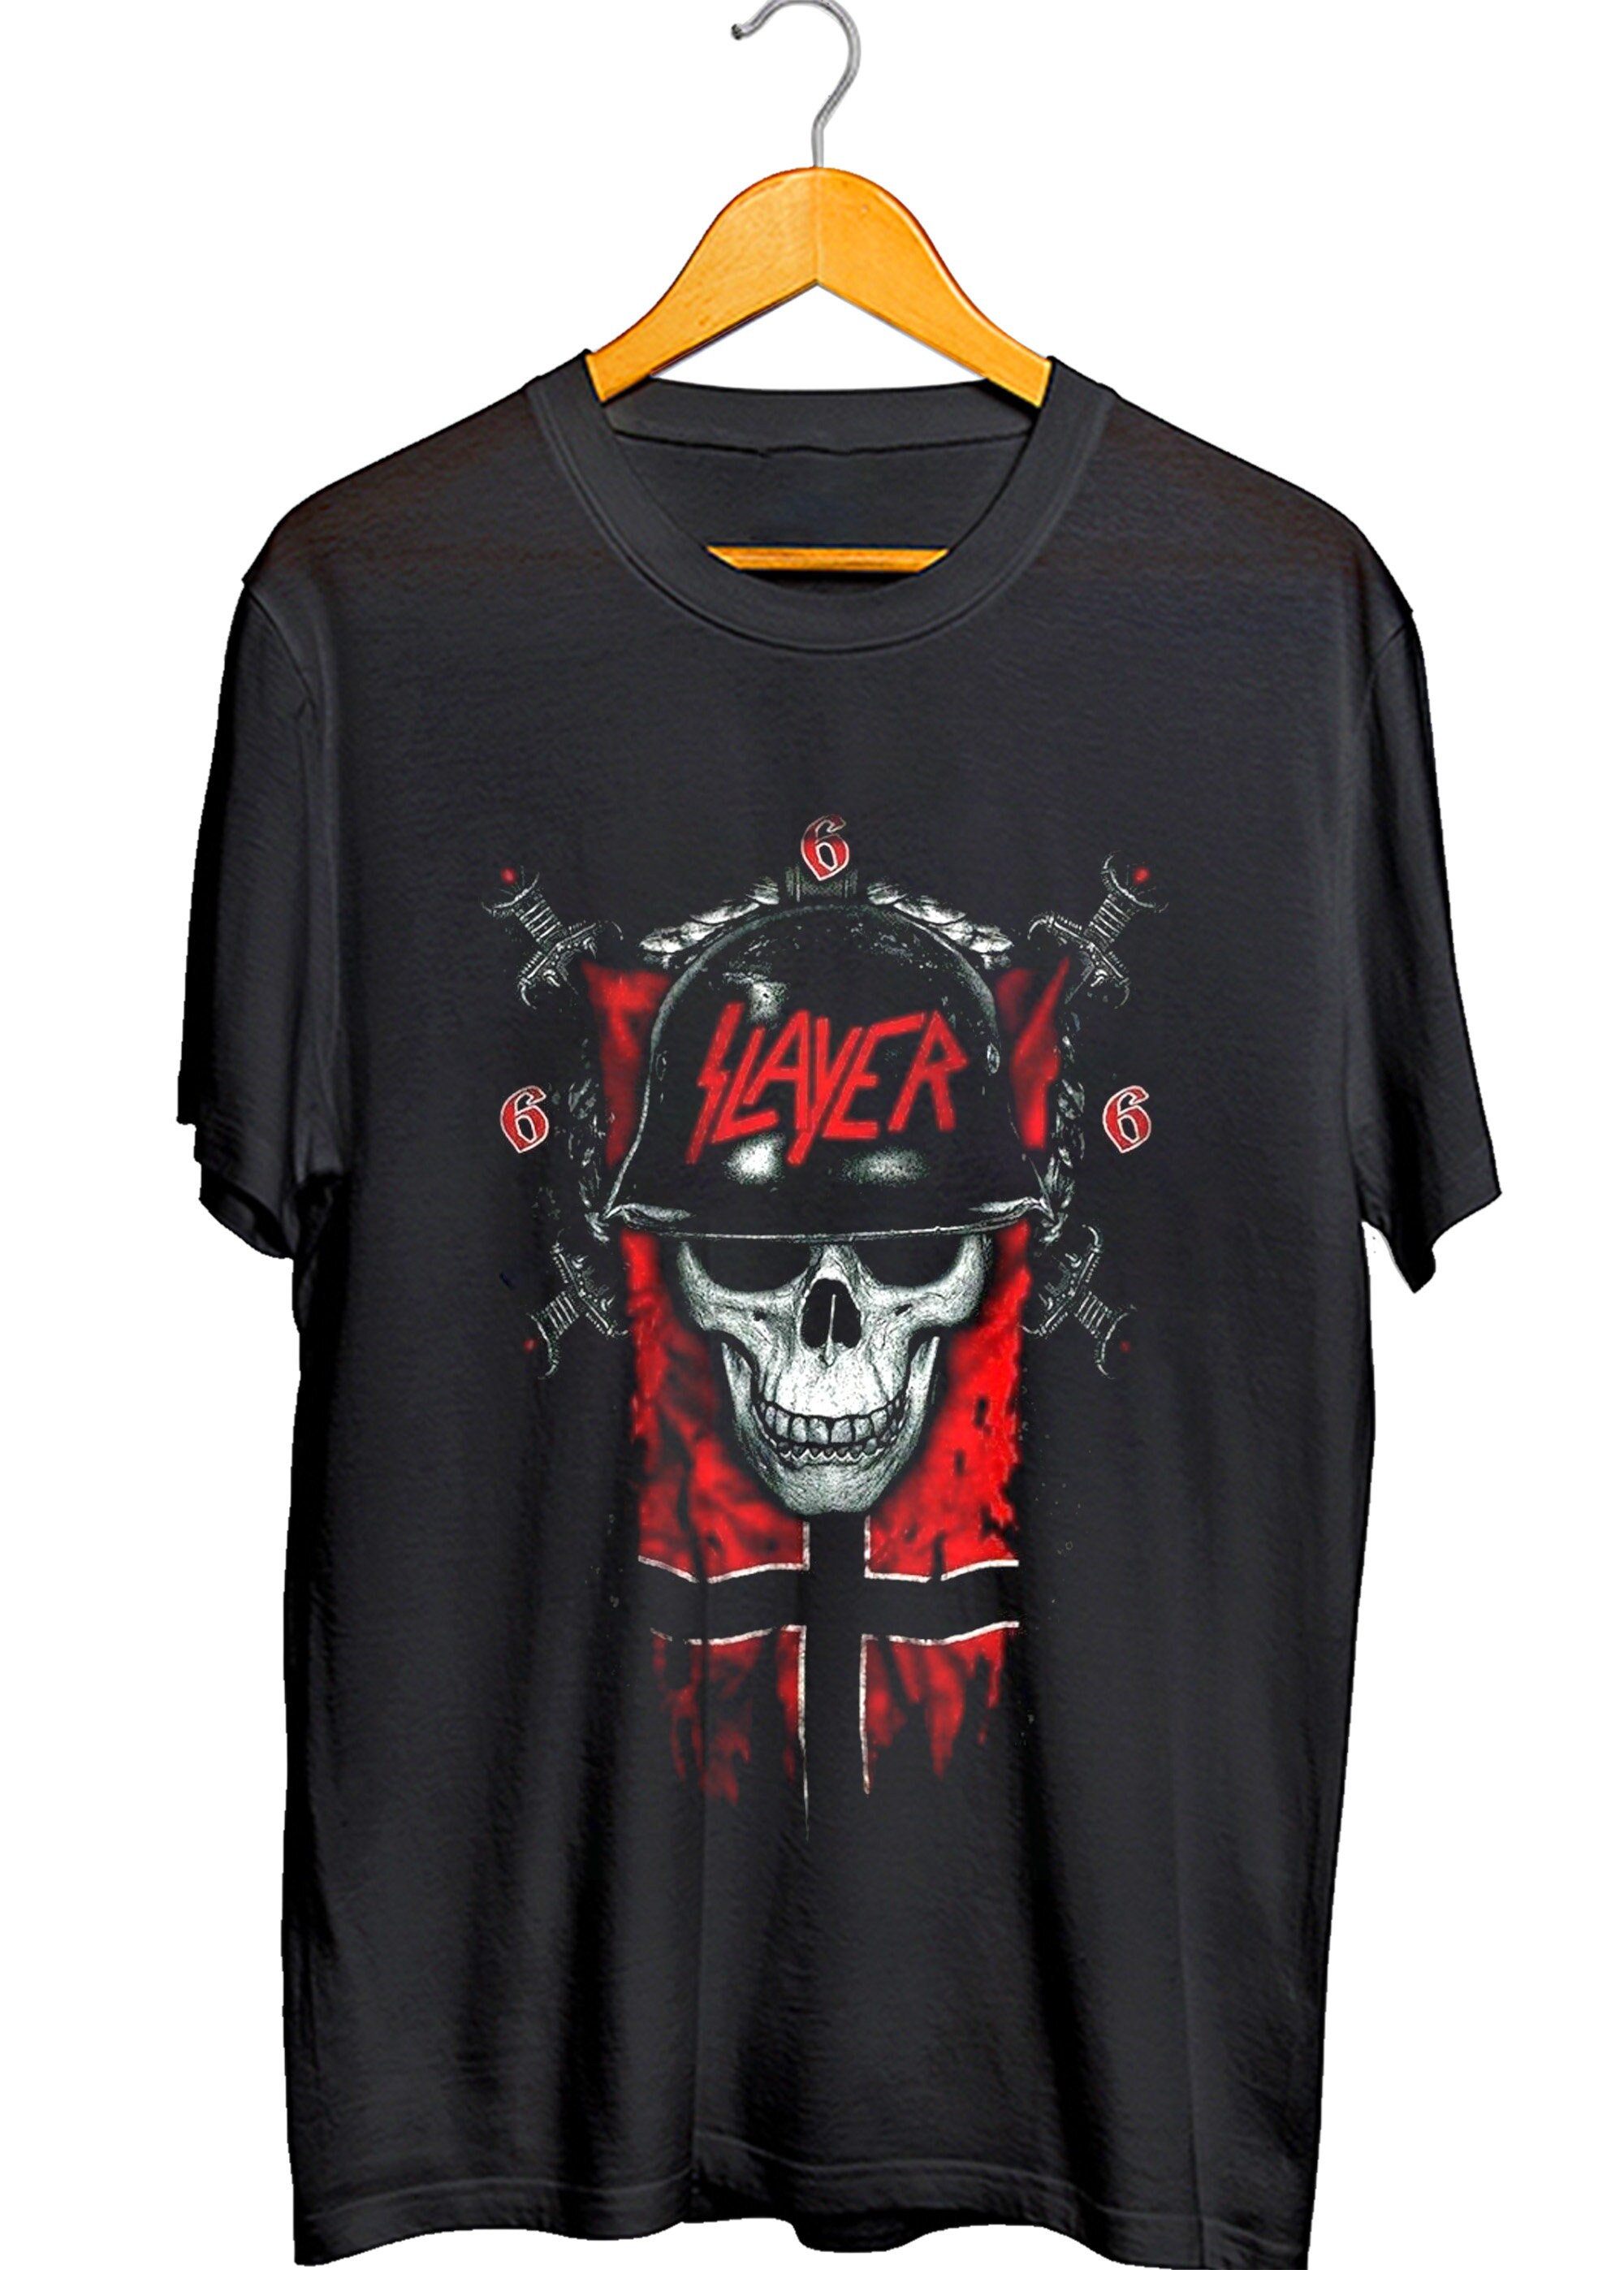 Slayer Band Vintage T Shirt Slayer Band Shirt Slayer Band | Etsy